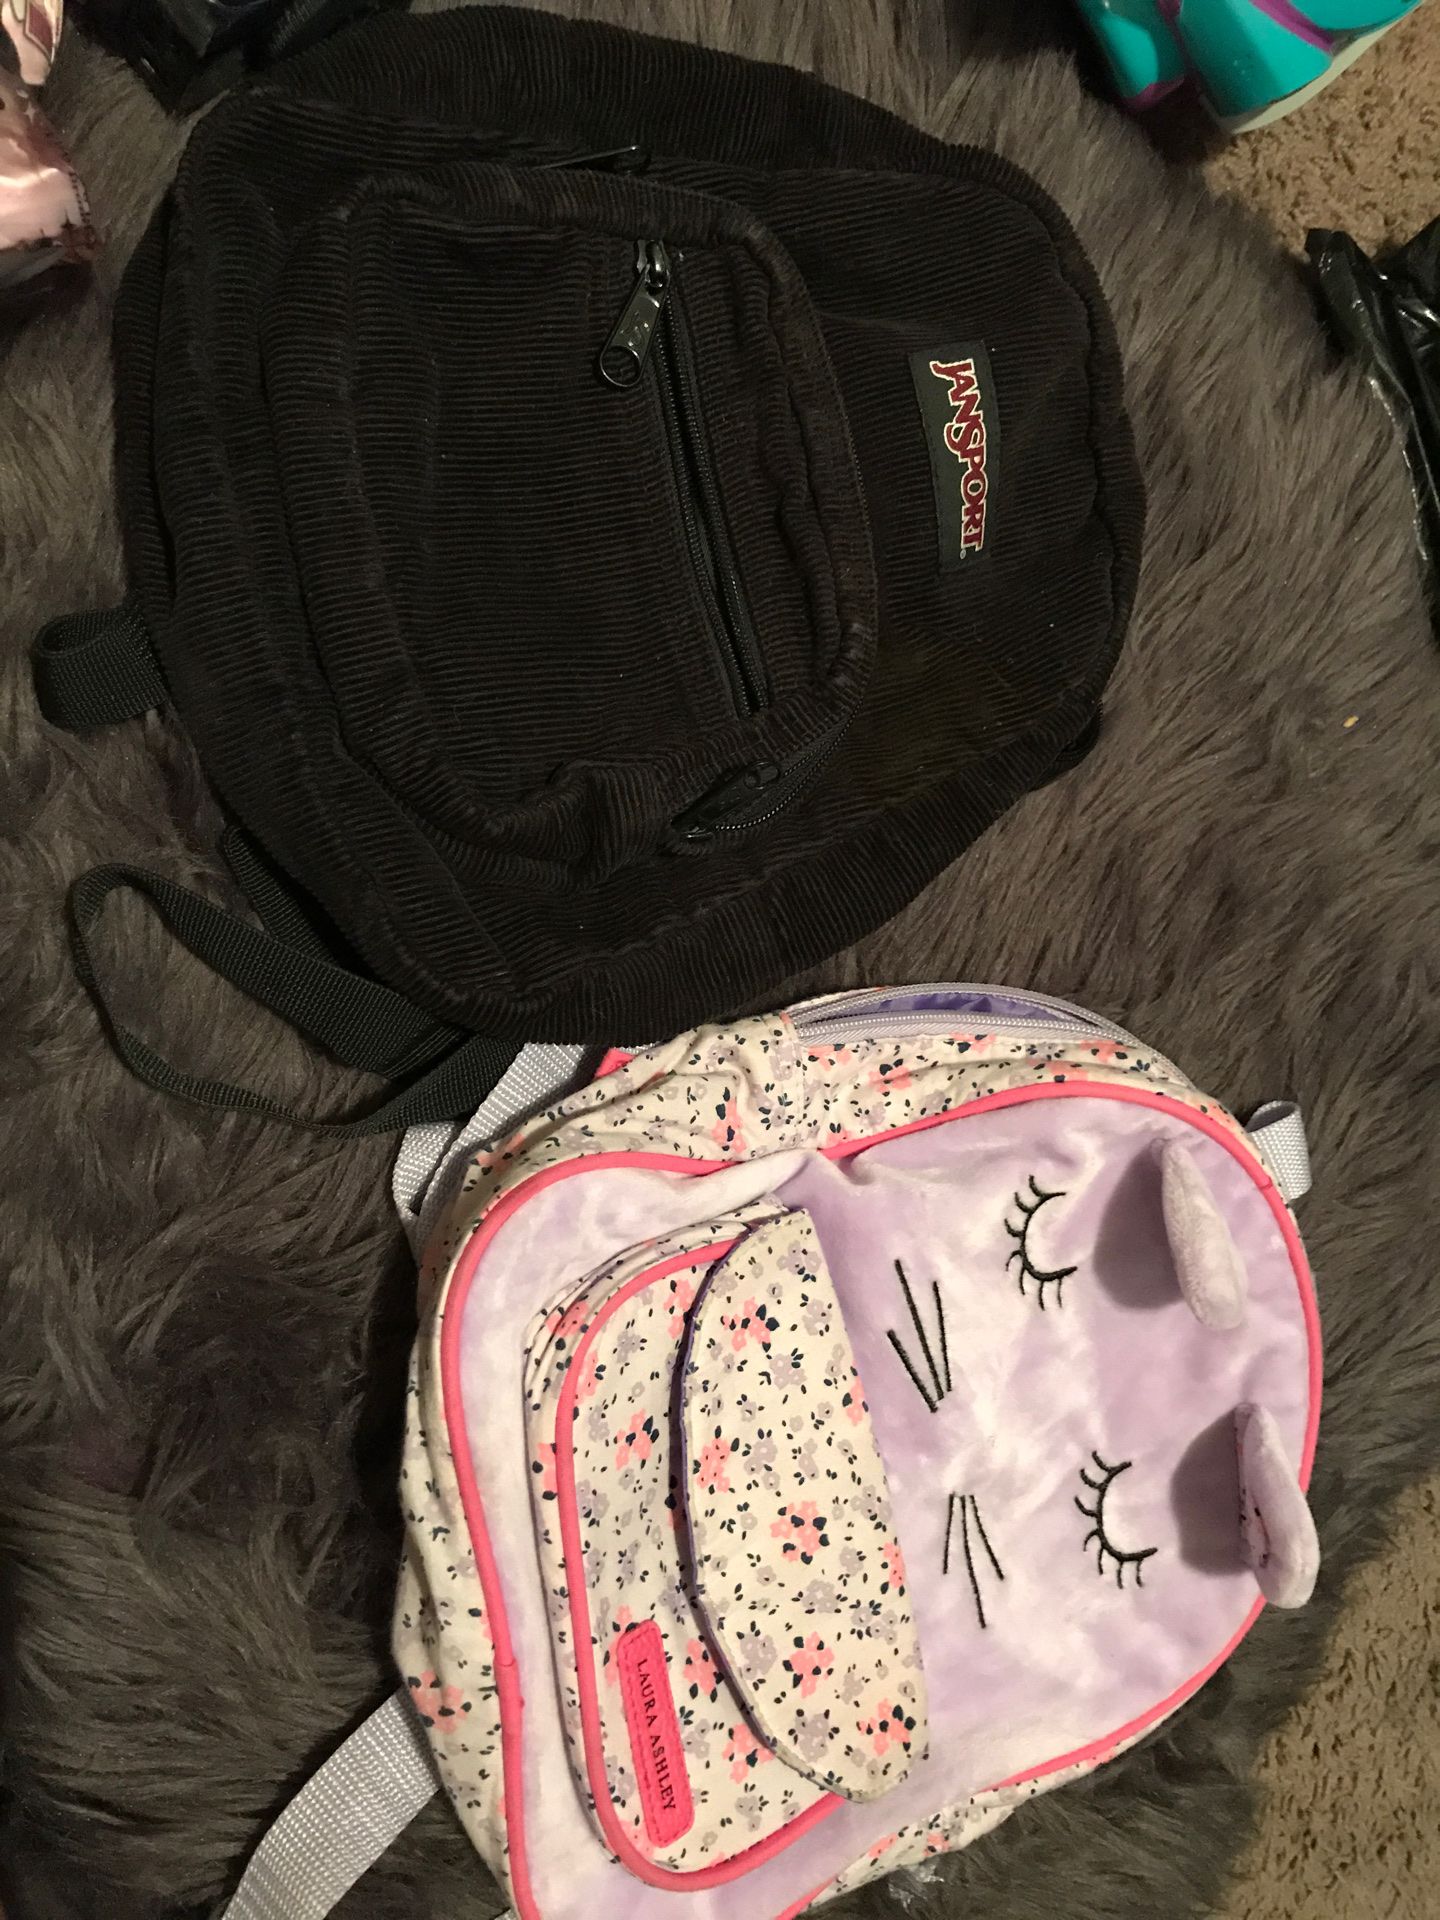 Two Jan sports backpacks $7